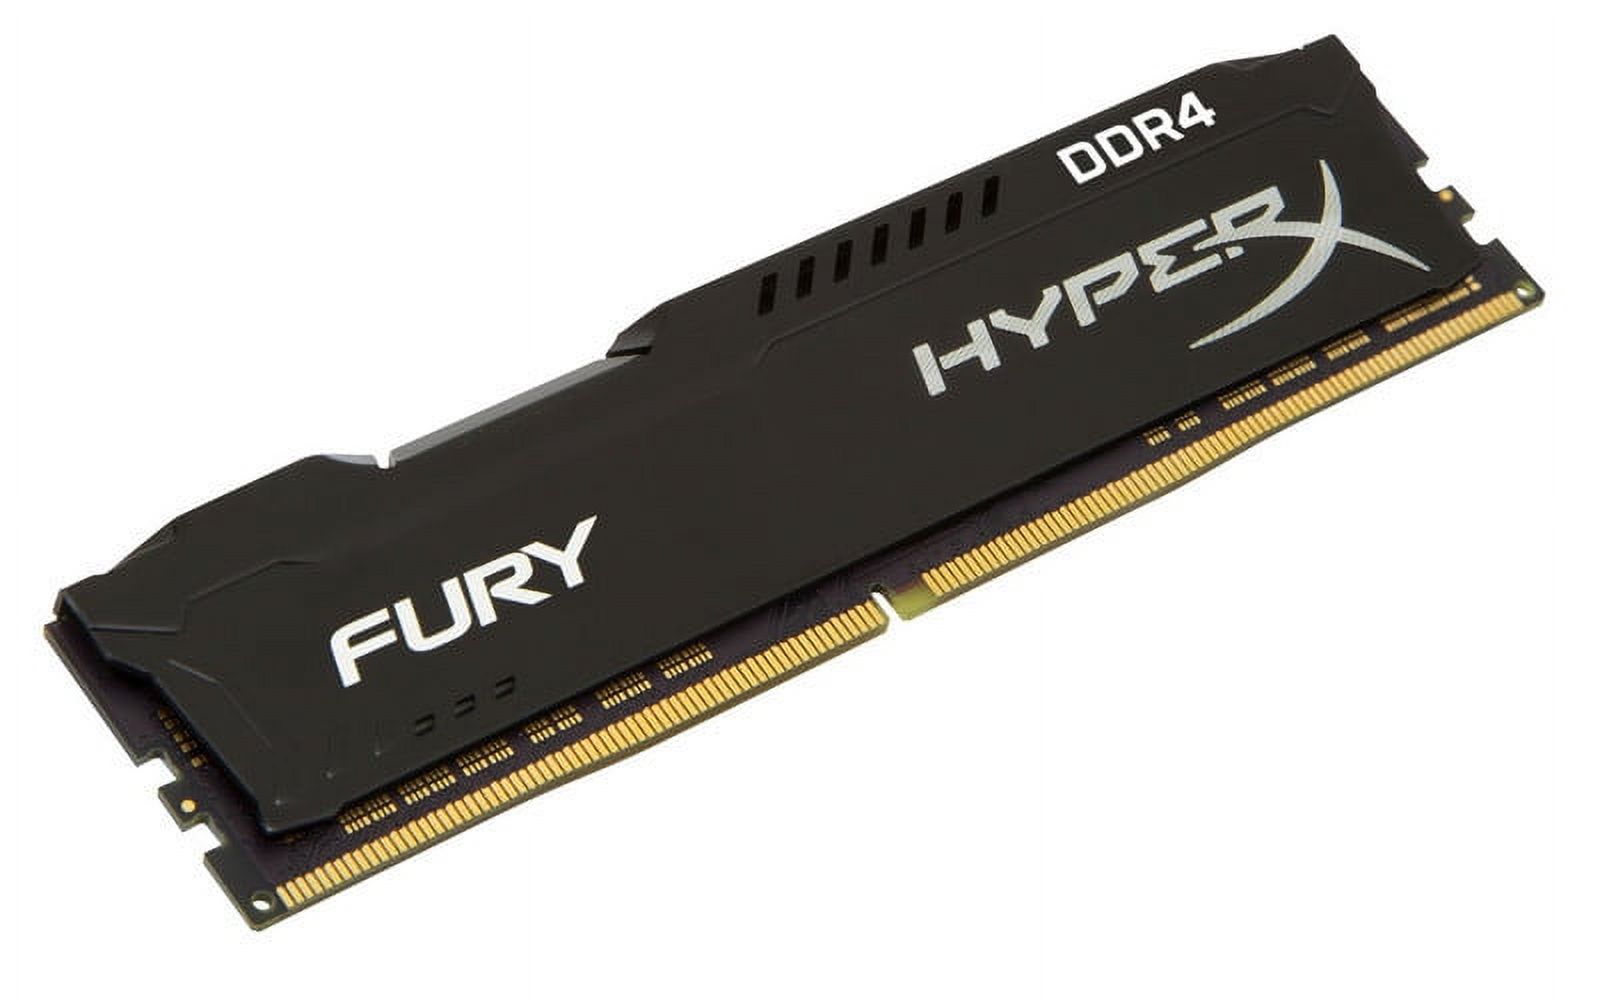 HyperX FURY Memory Black 16GB 2666MHz DDR4 CL15 DIMM (Kit of 4) HX426C15FBK4/16 - image 2 of 2